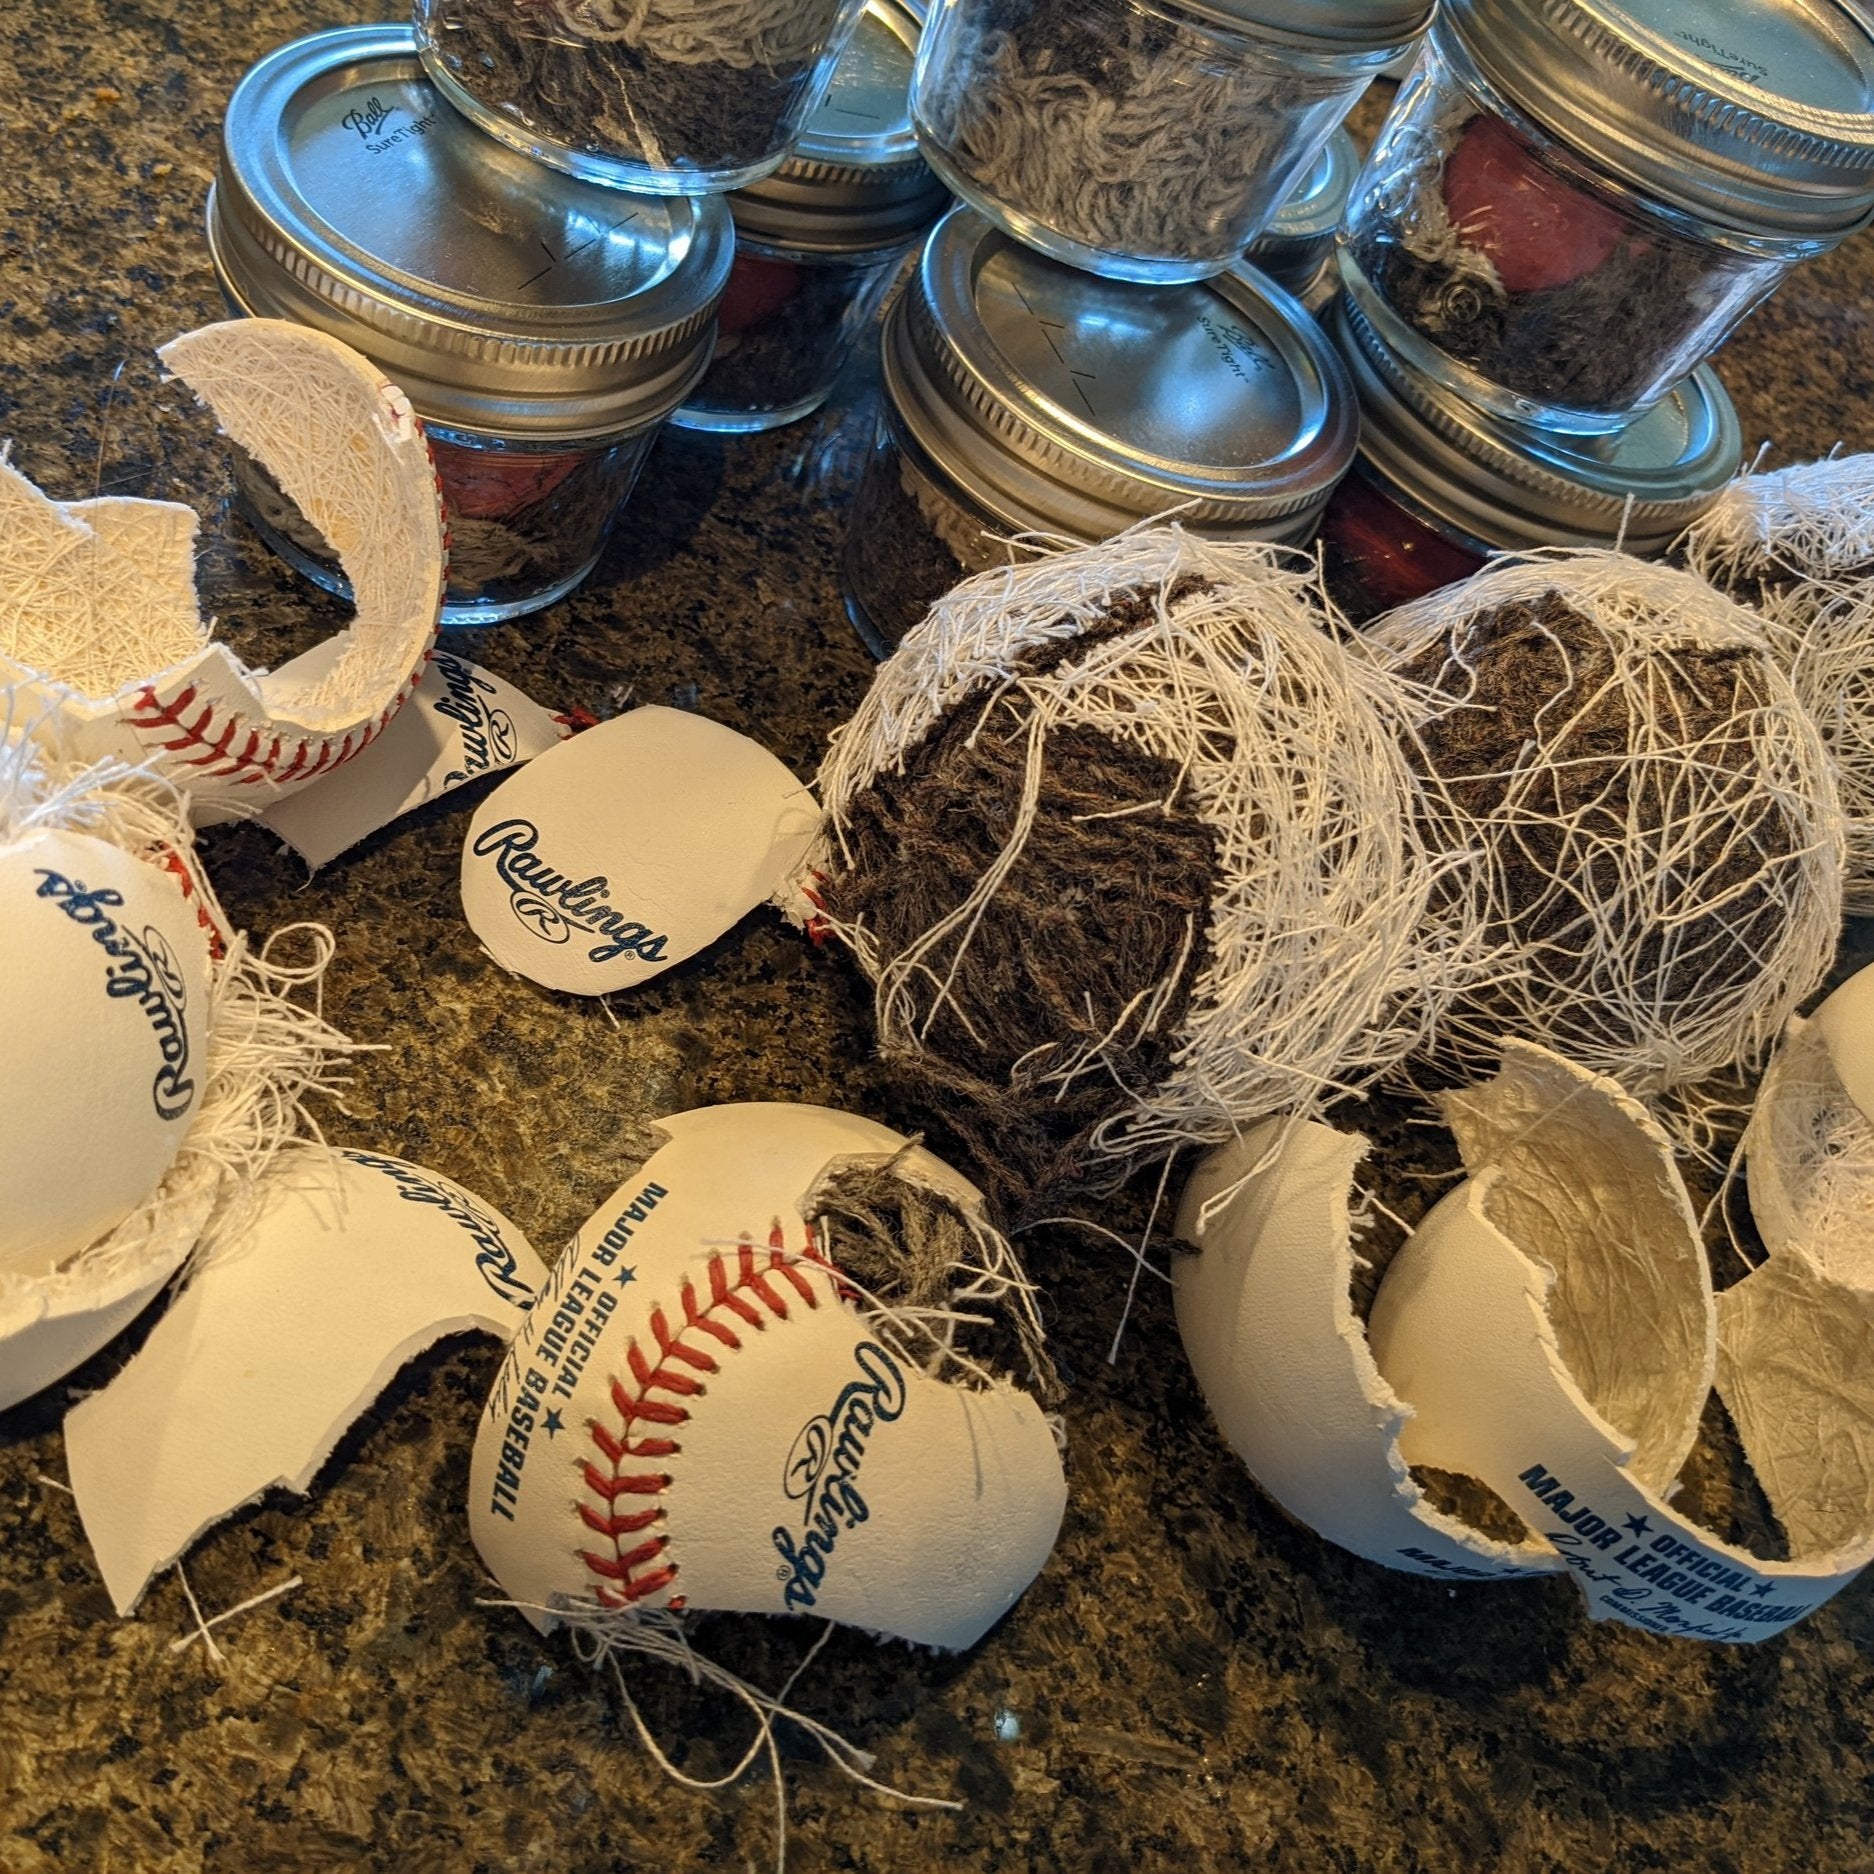 Custom baseball jewelry made from real baseballs